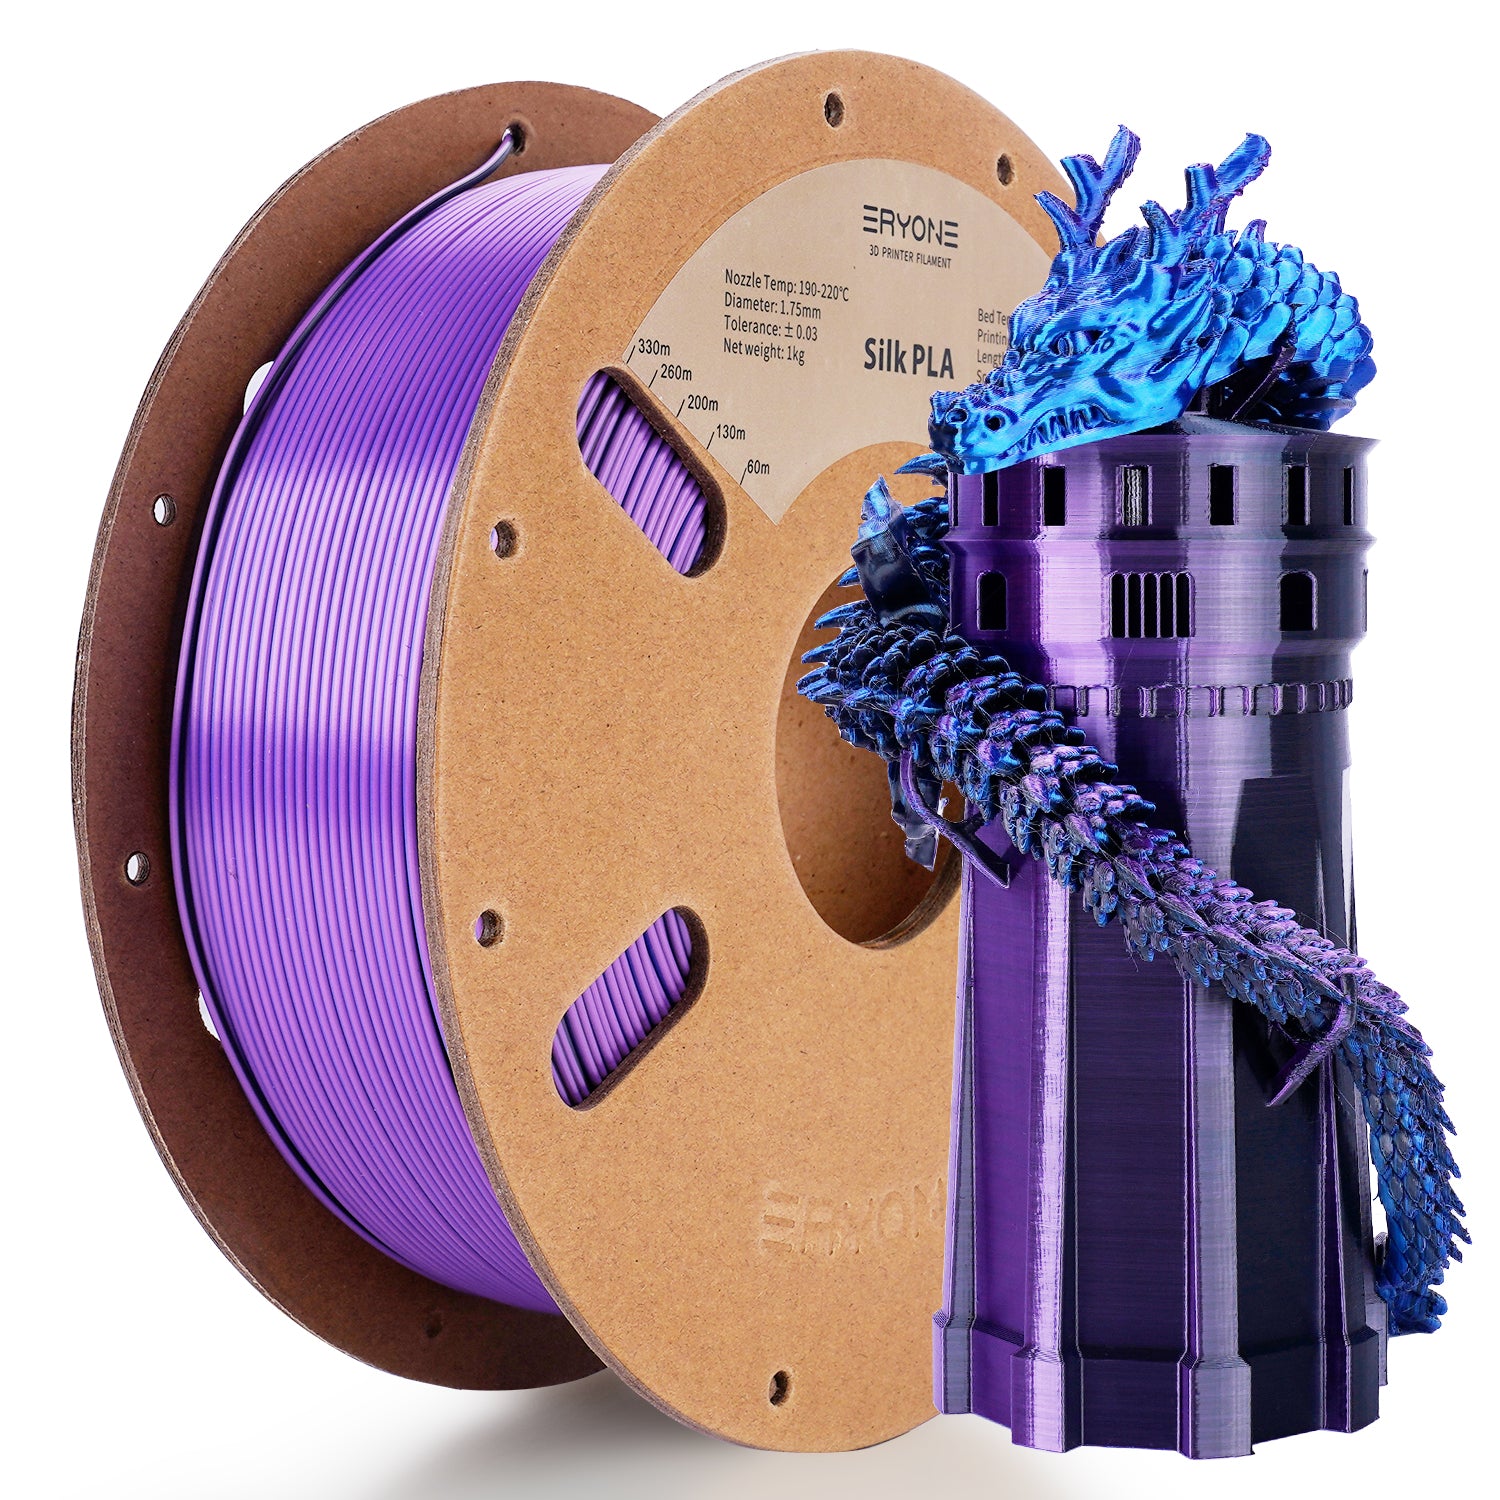 Filament 3D Silk Glossy 1 Kg Violet 1.75 mm